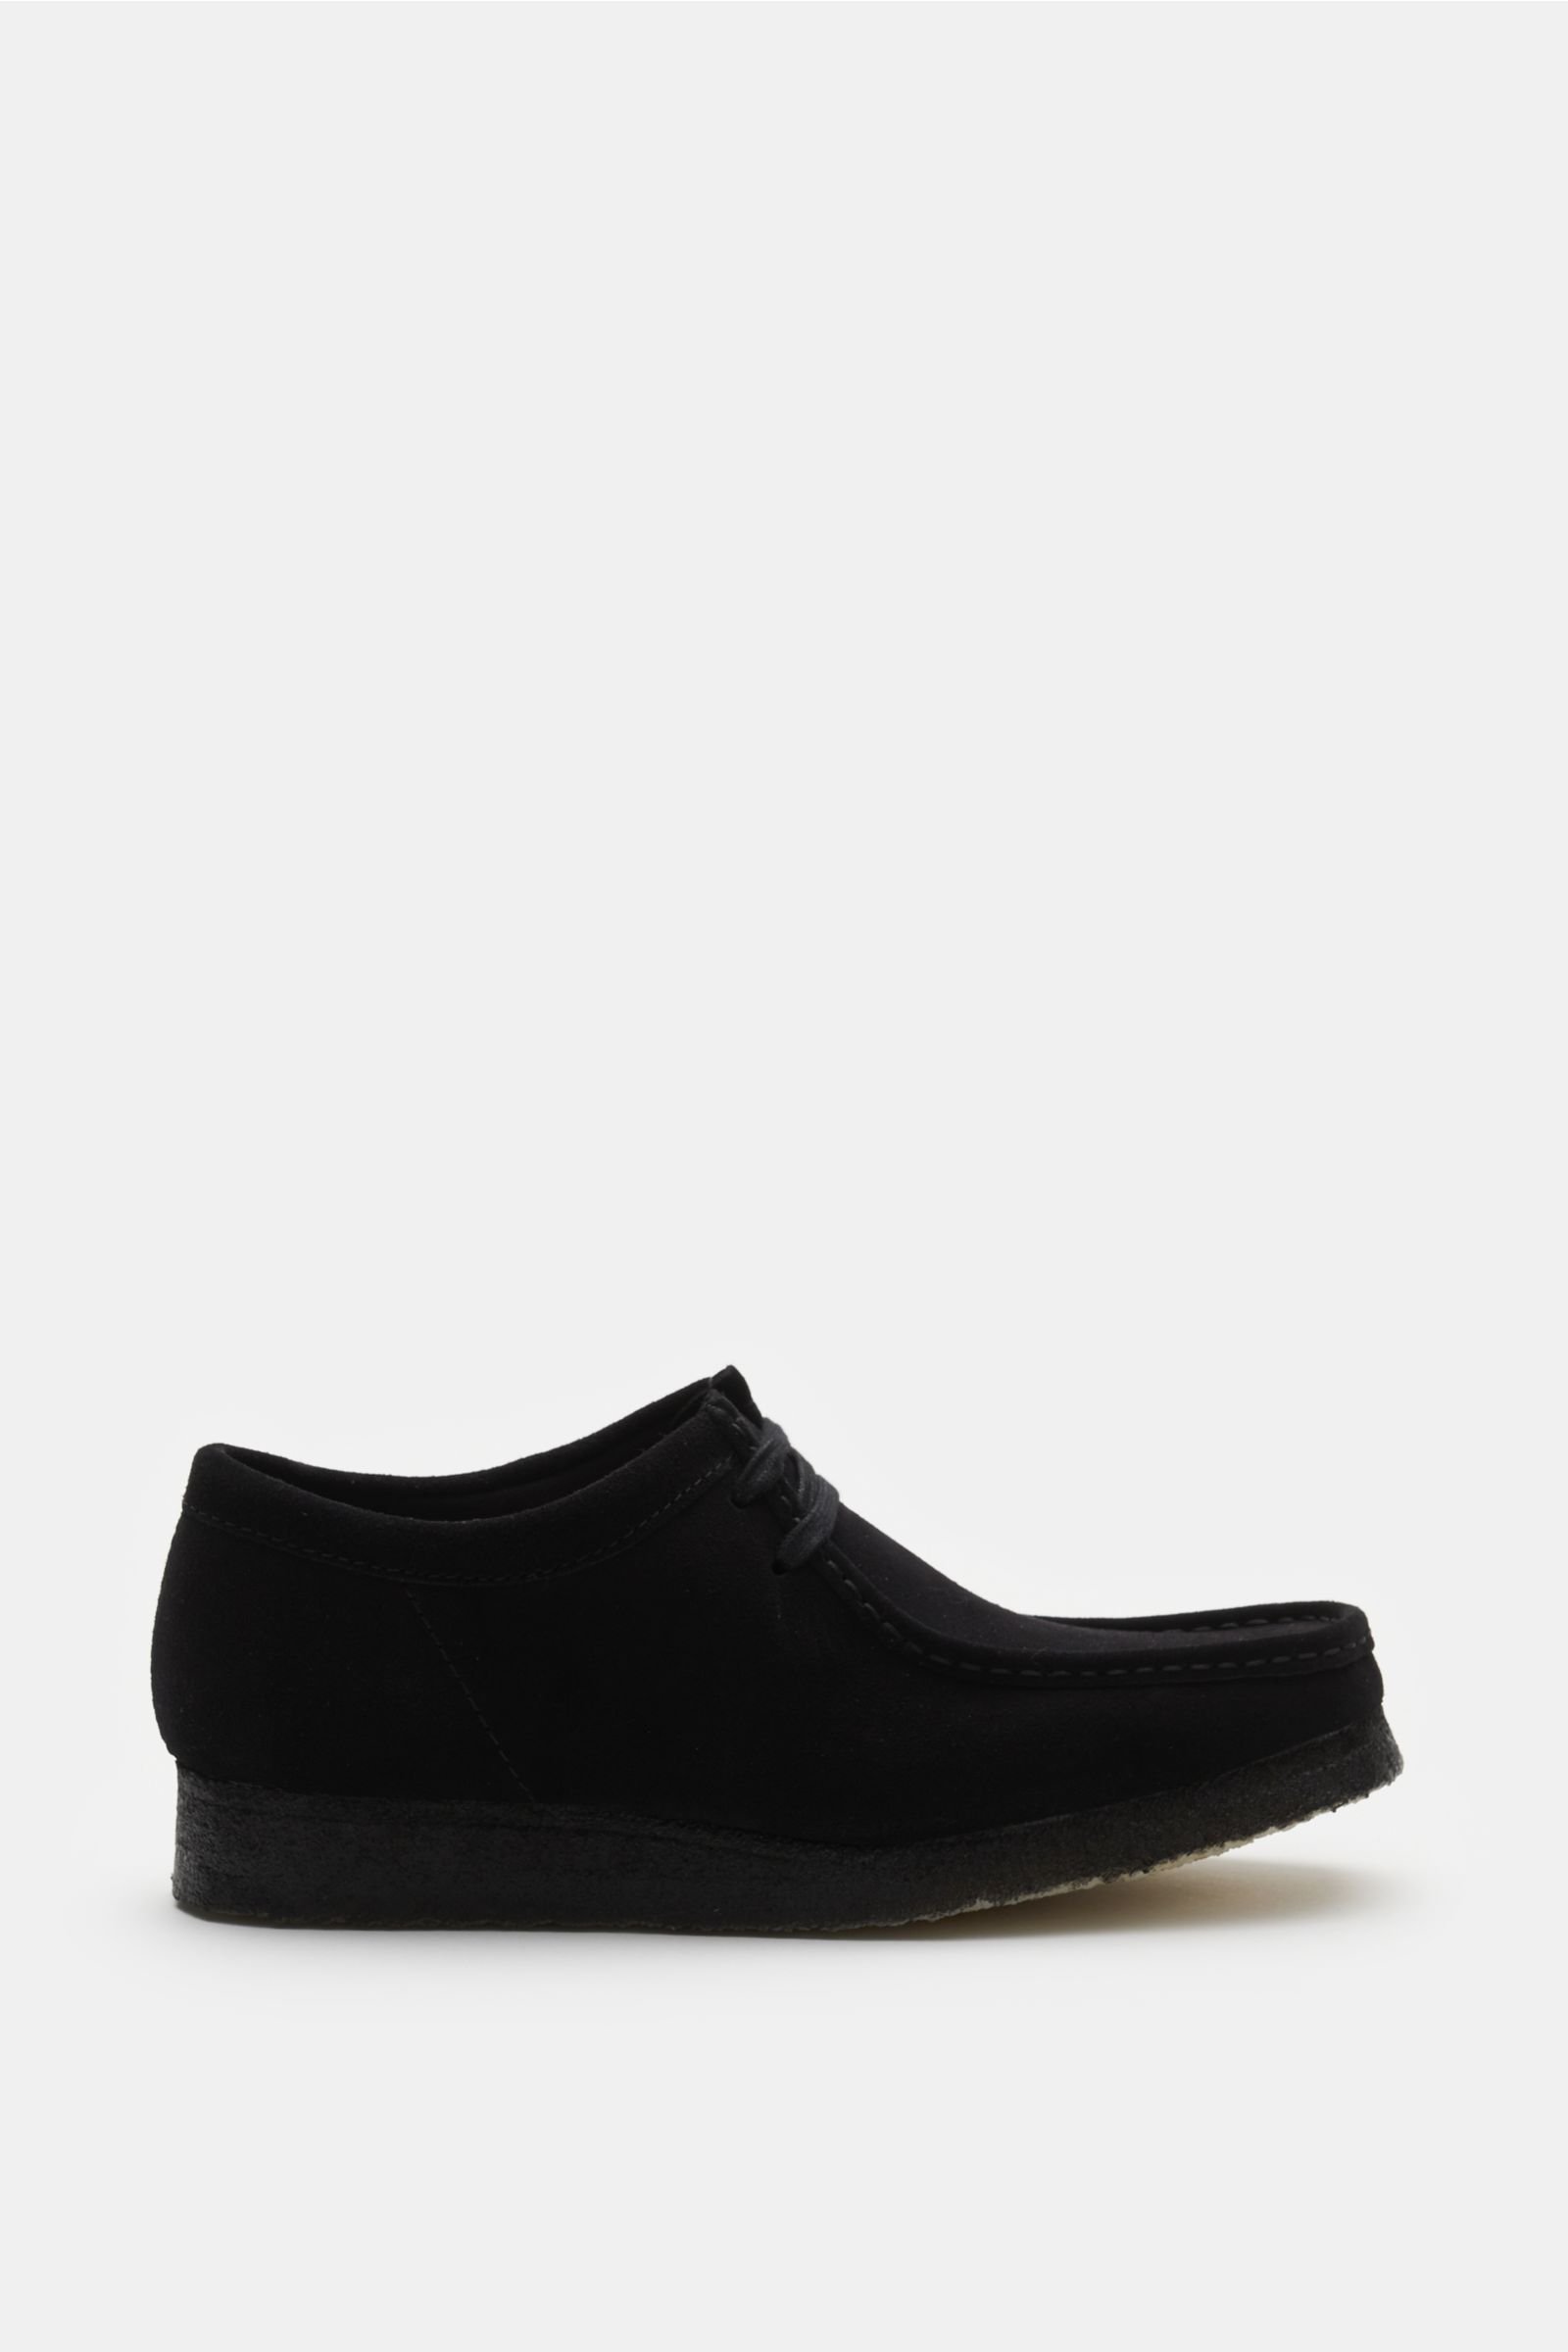 Dress shoes 'Wallabee' black